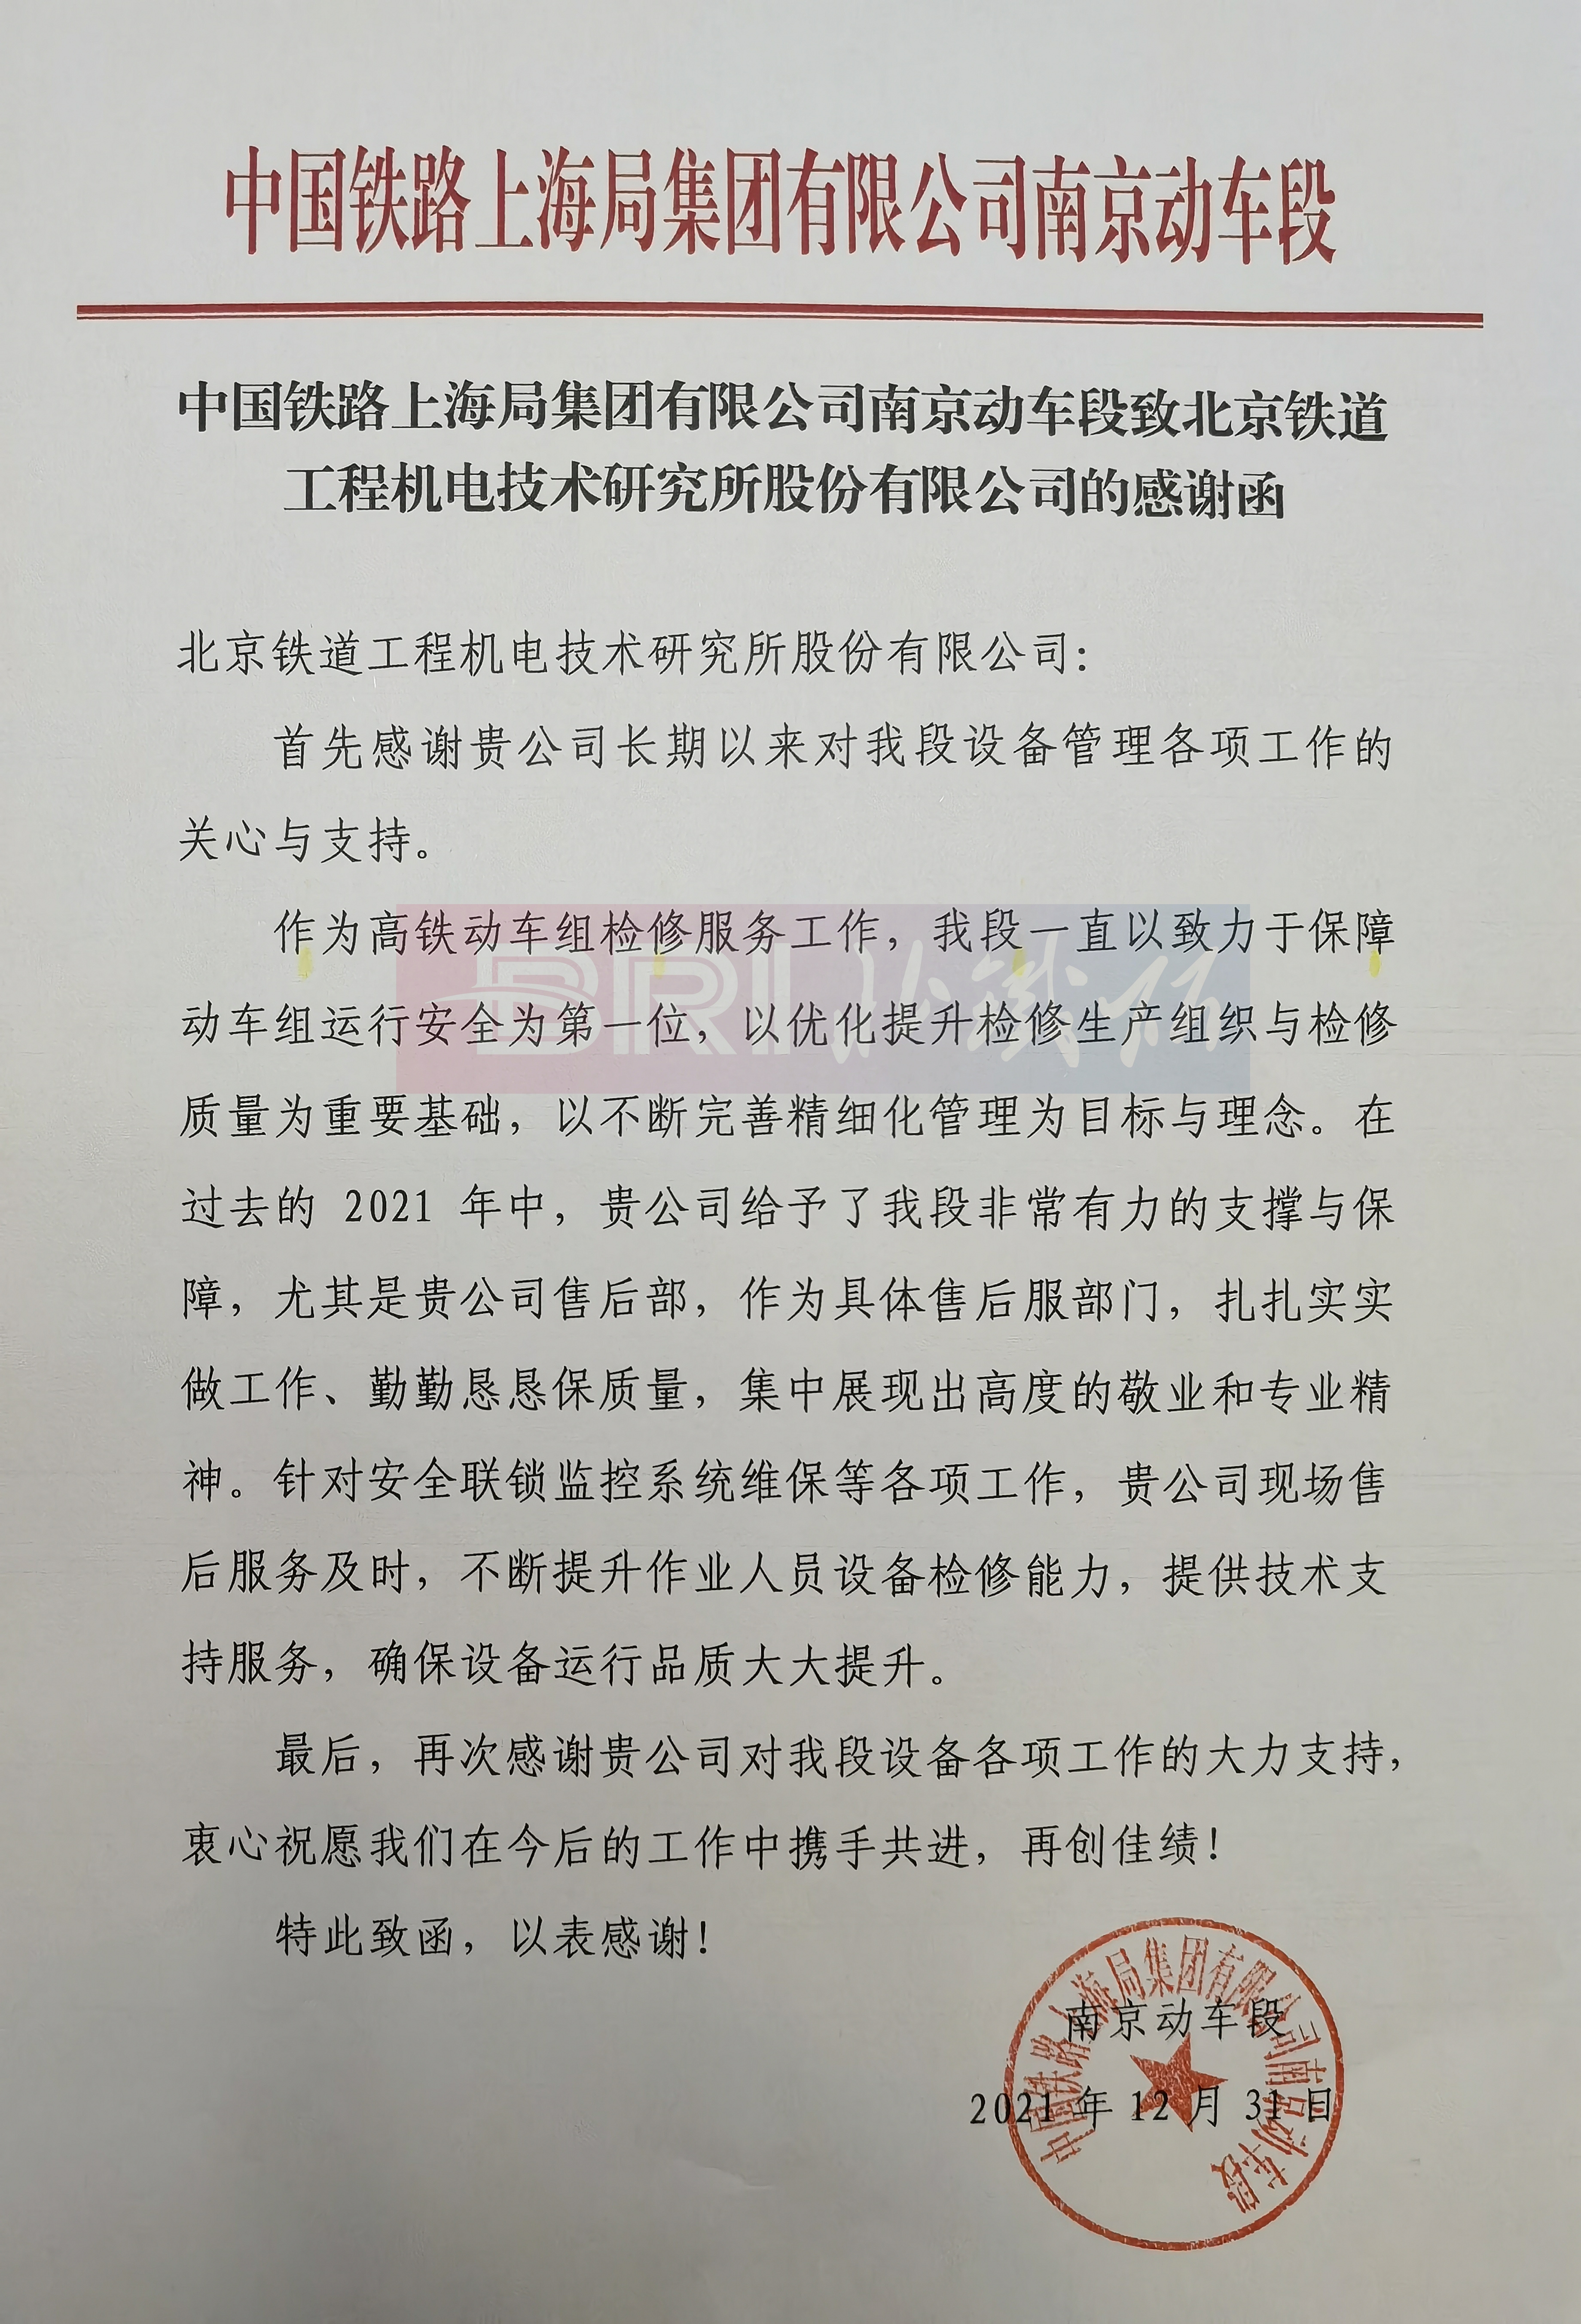 The commendation letter from Nanjing EMU Depot